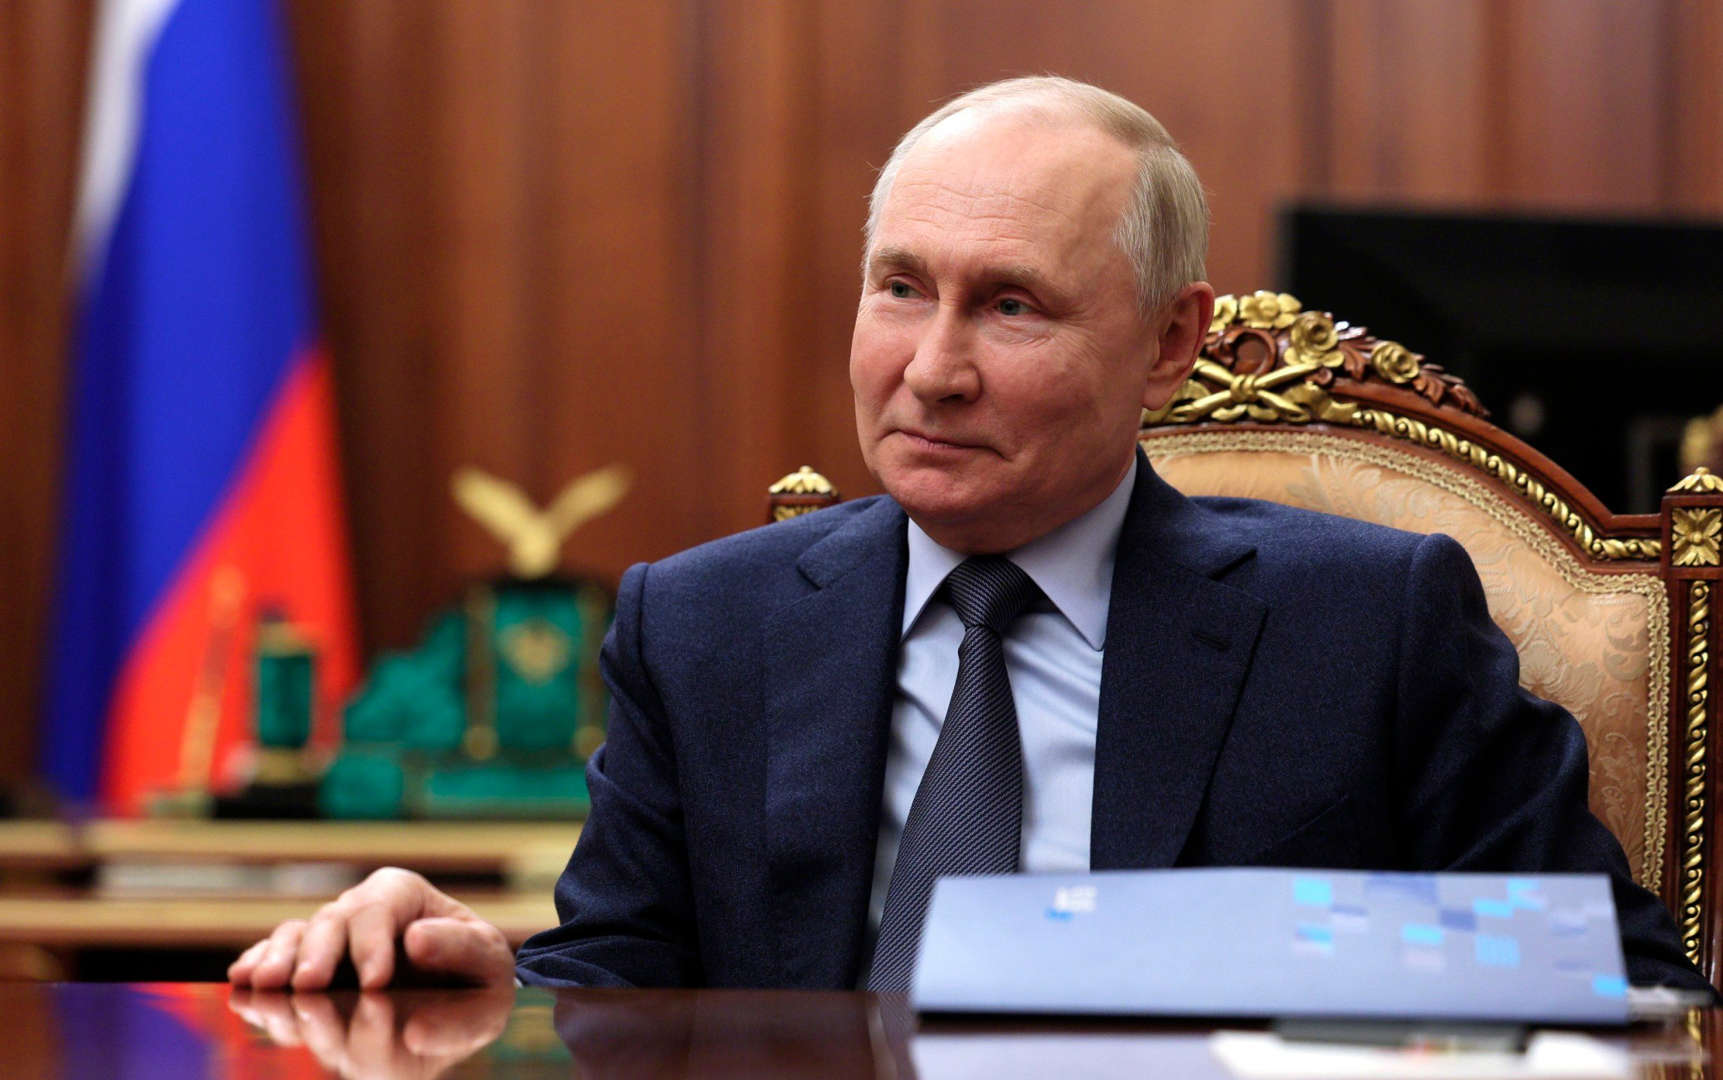 Europe needs massive rearmament to outlast Putin in Ukraine